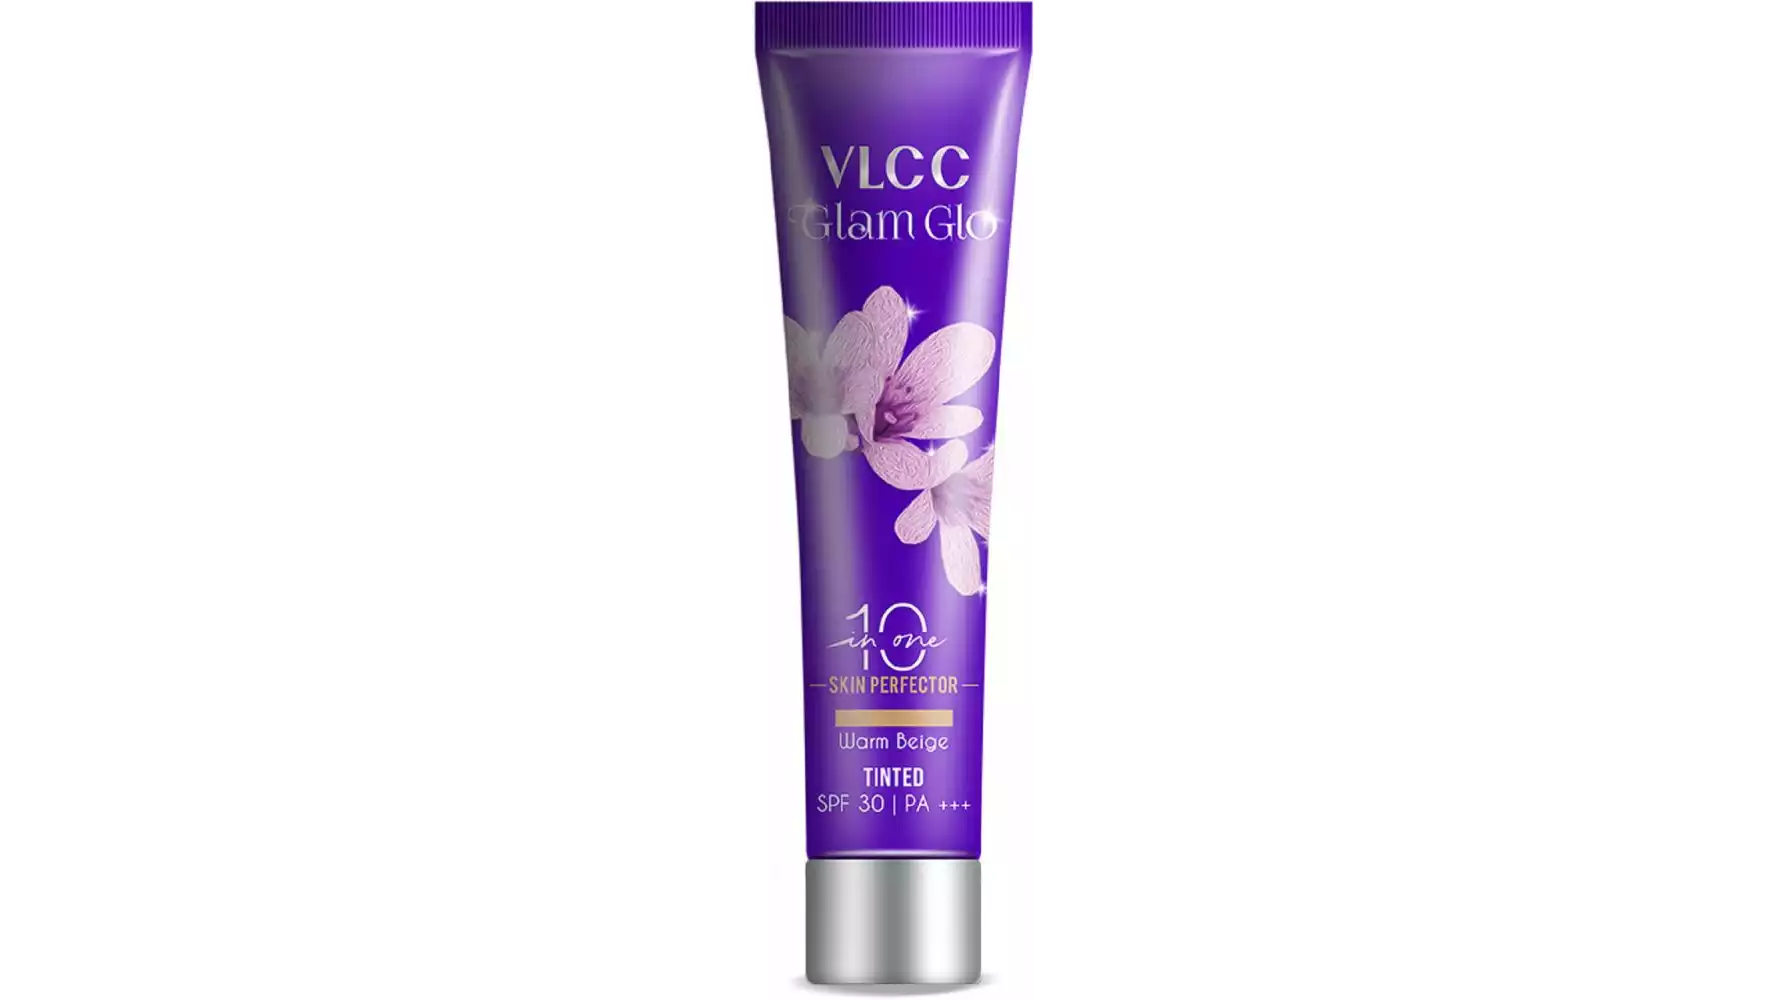 VLCC Glam Glo 10 In 1 Skin Perfector - Warm Beige Spf 30 Pa+++ (30g)